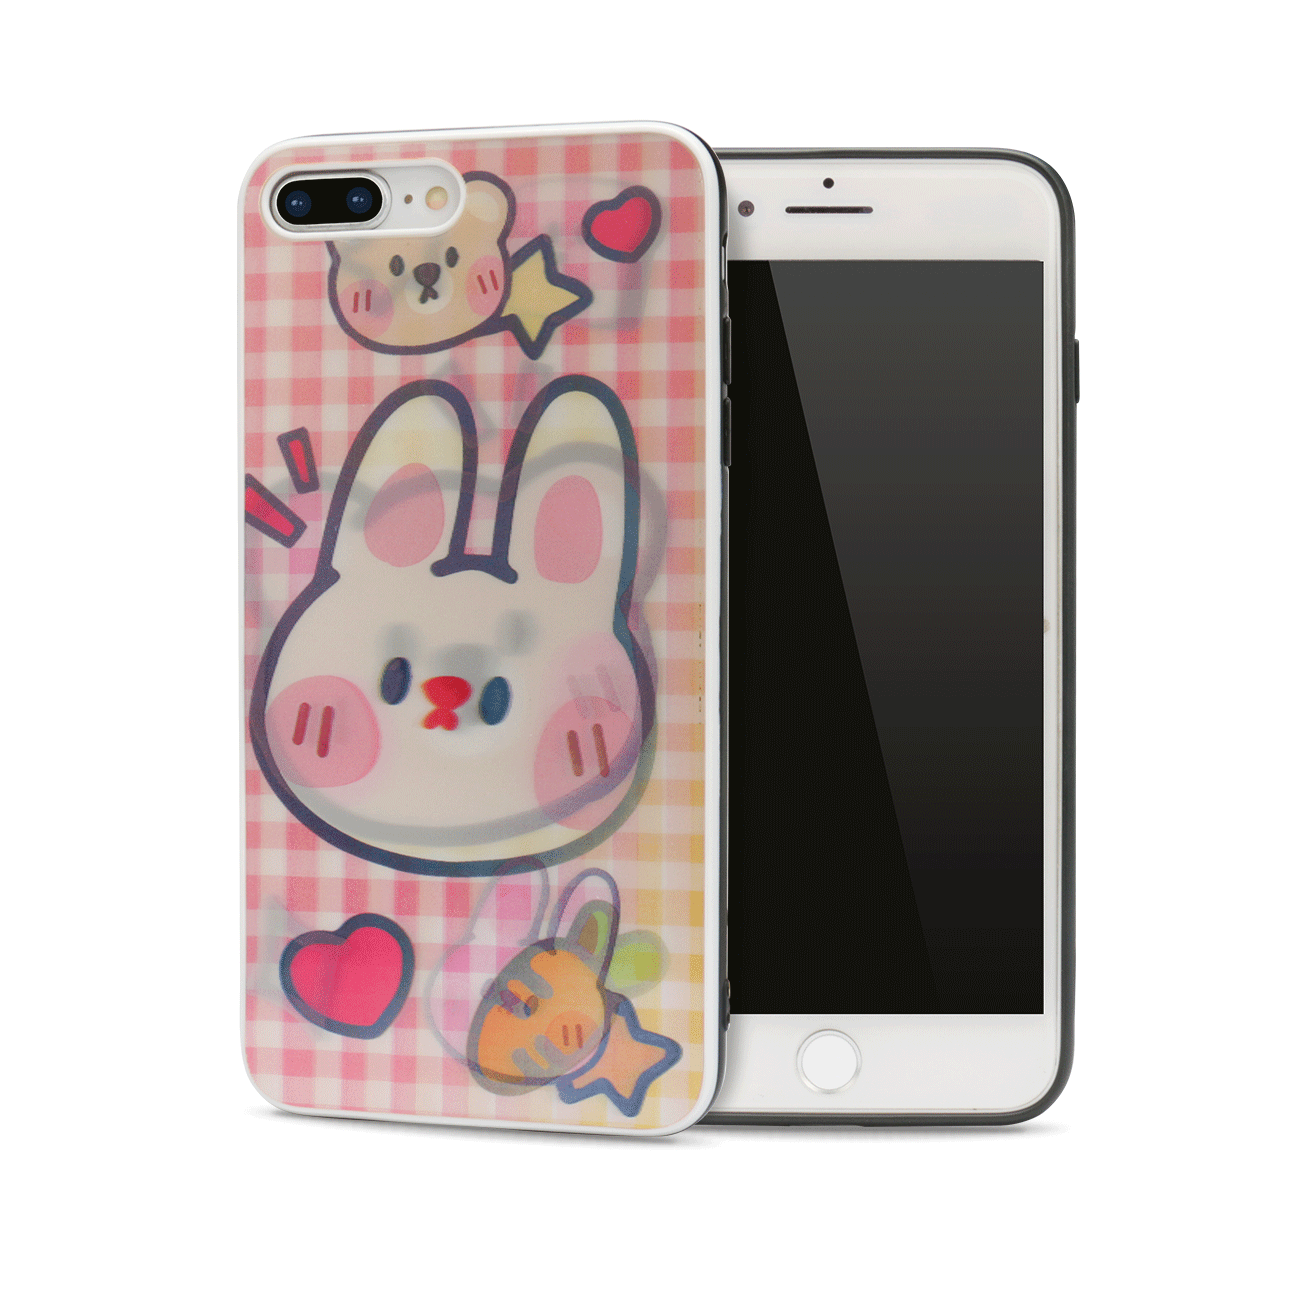 iPHONE 8 Plus / 7 Plus 3D Dynamic Change Lenticular Design Case (Bunny)